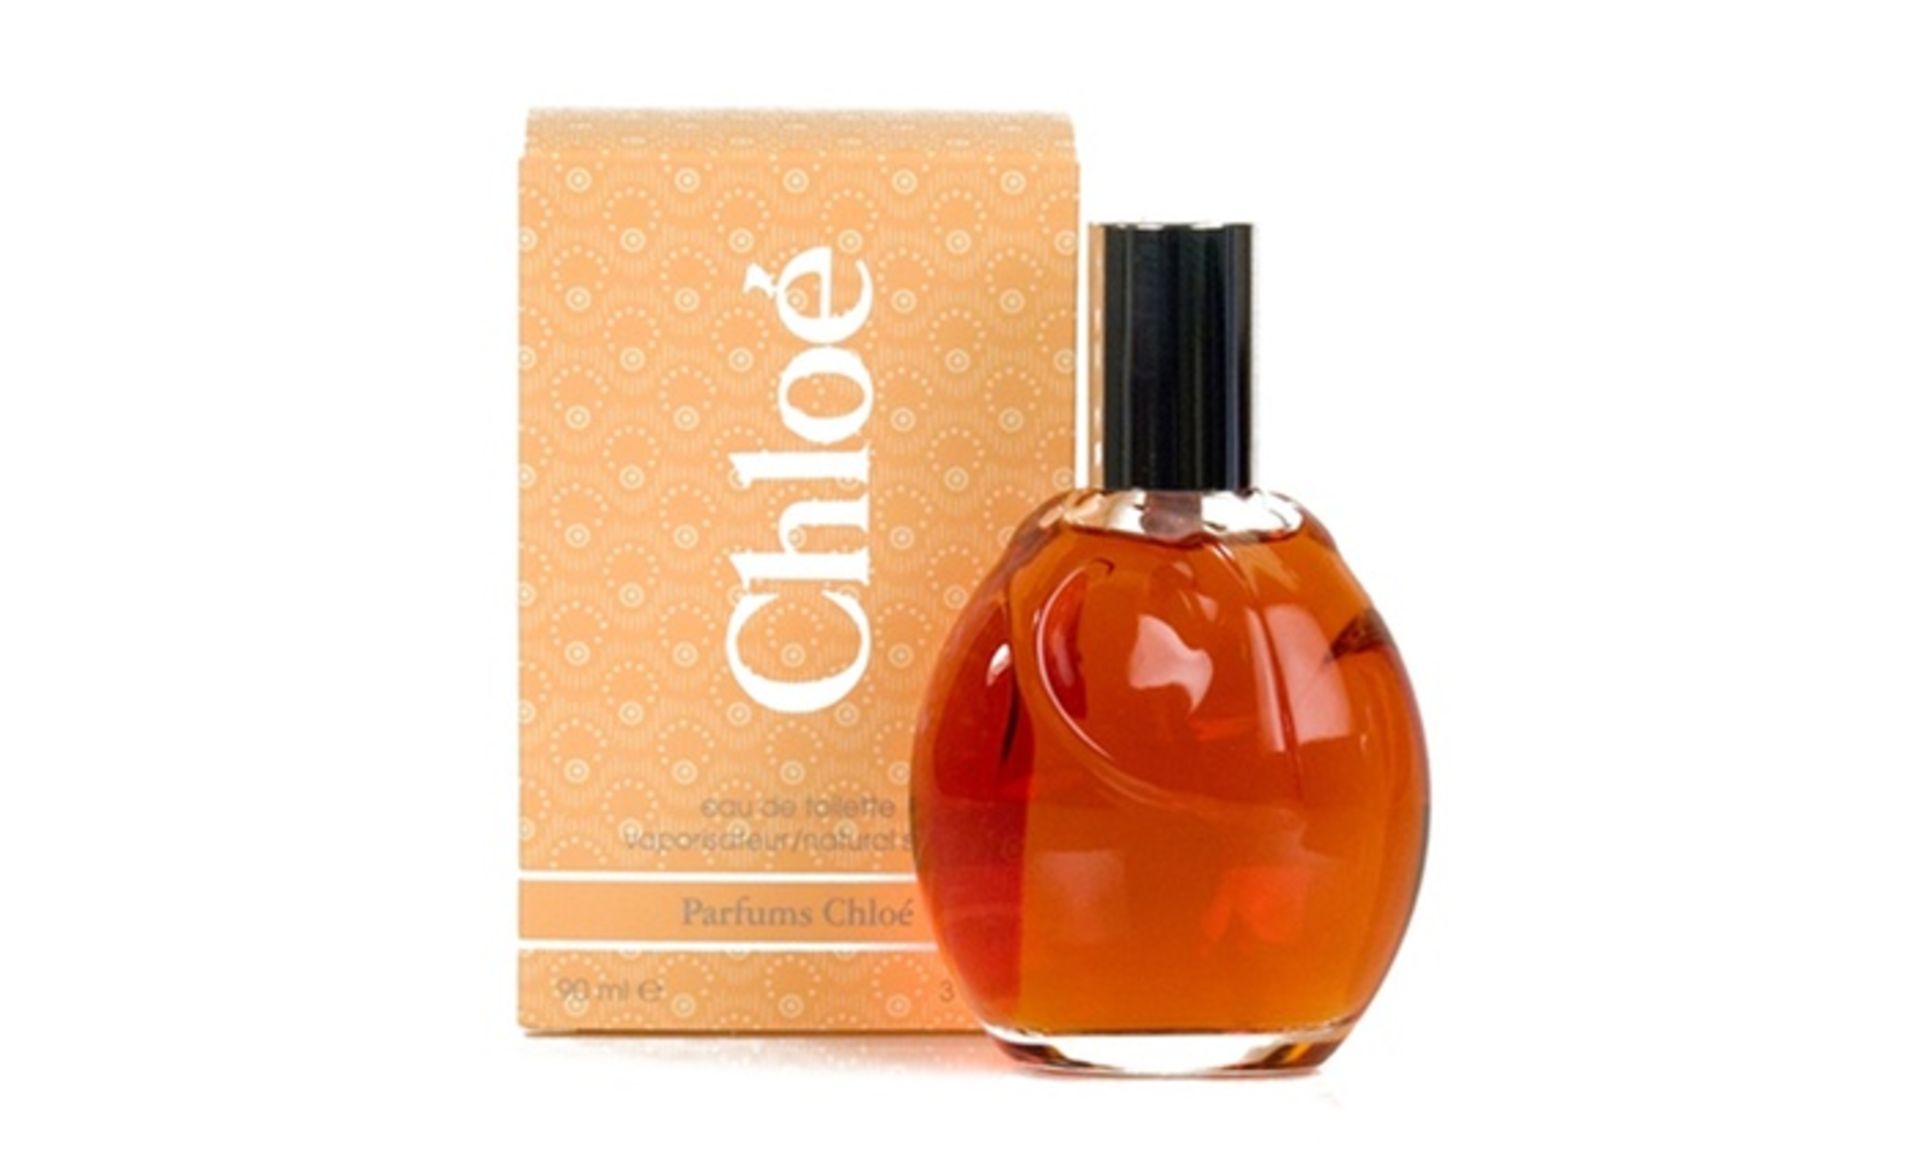 V Brand New Chloe By Parfums Chloe 90ml Eau De Toilette